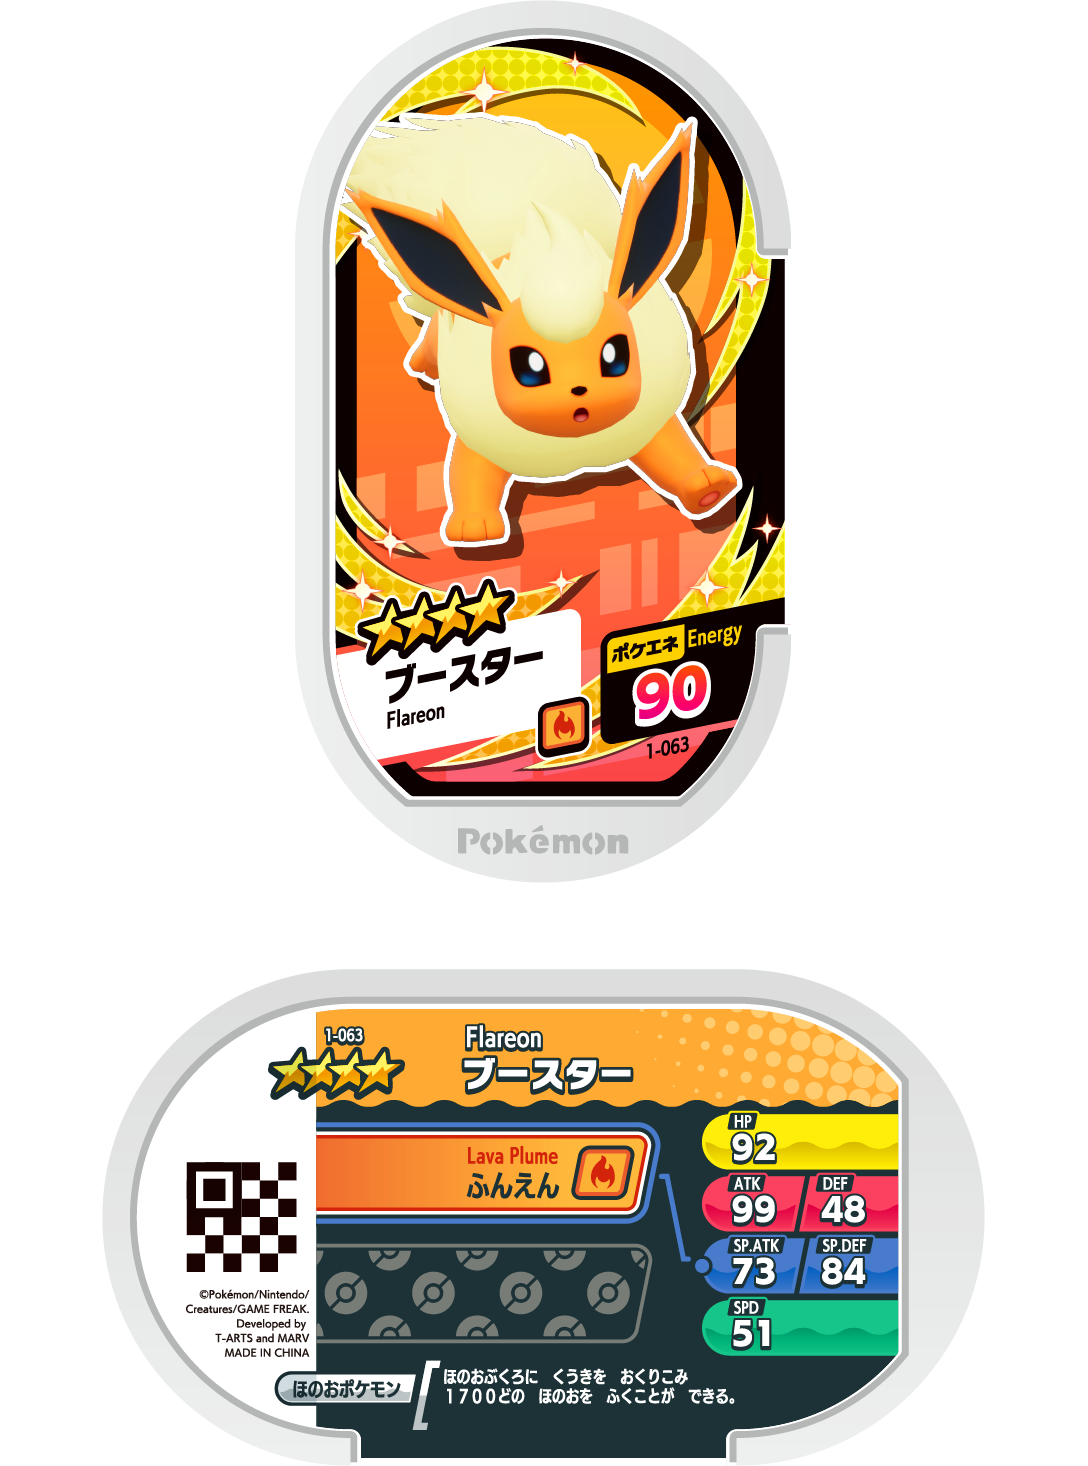 Pokémon MEZASTAR 1-063 ★2~4 Pokémon tag Flareon